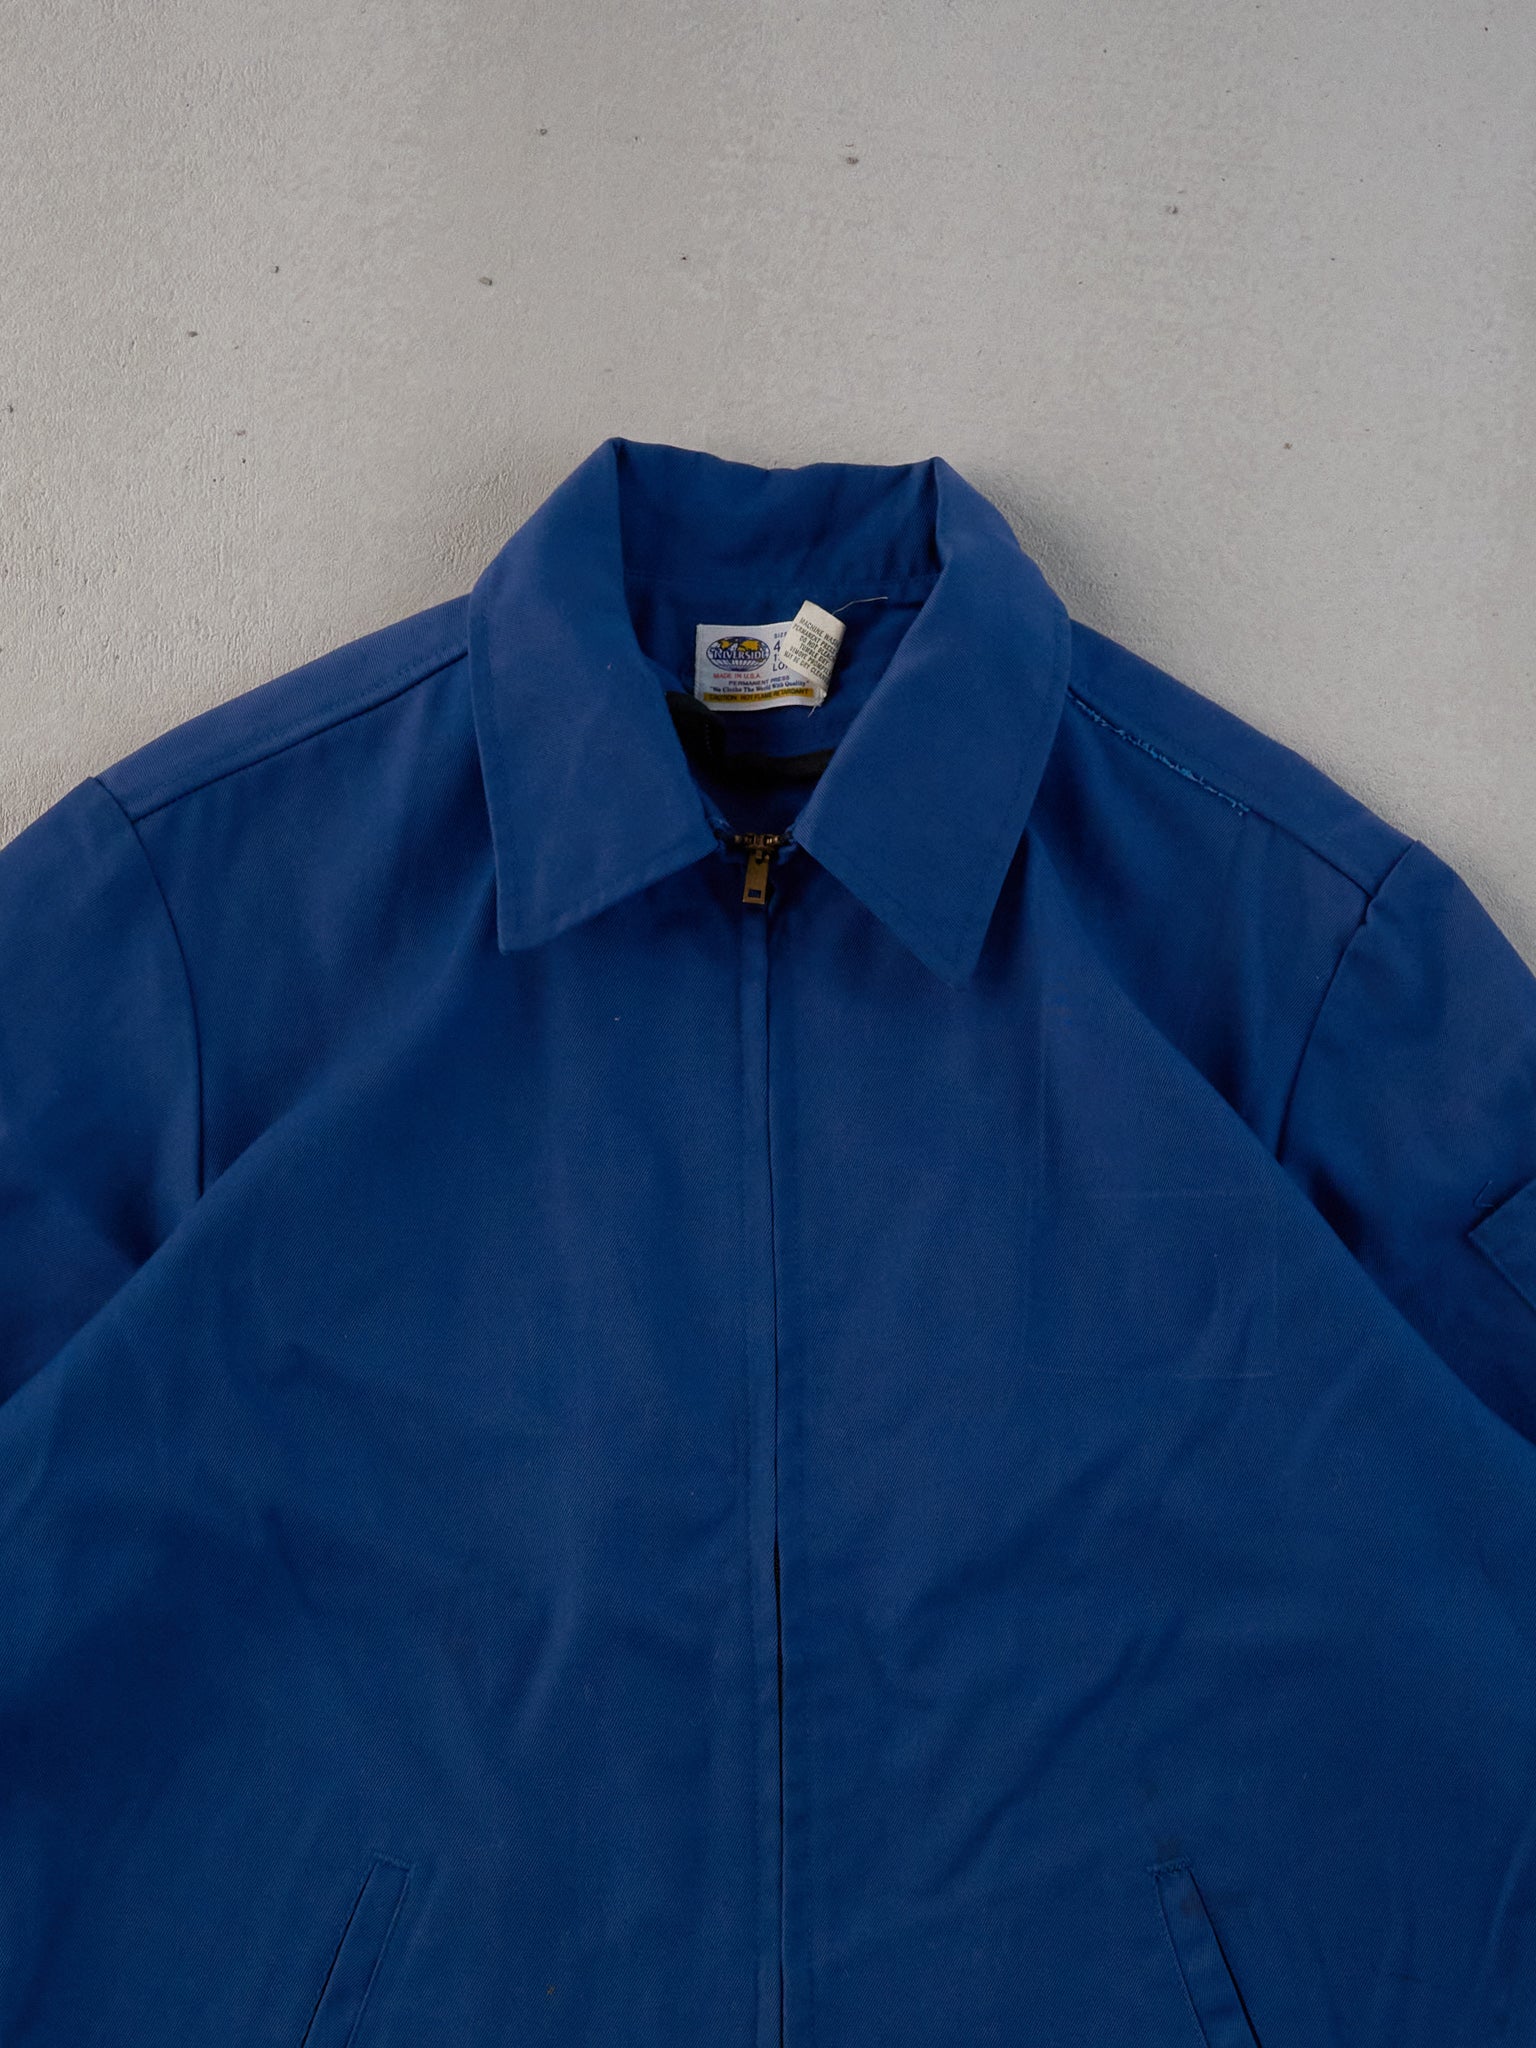 Vintage 90s Royal Blue Workwear Collared Zip Up (L)